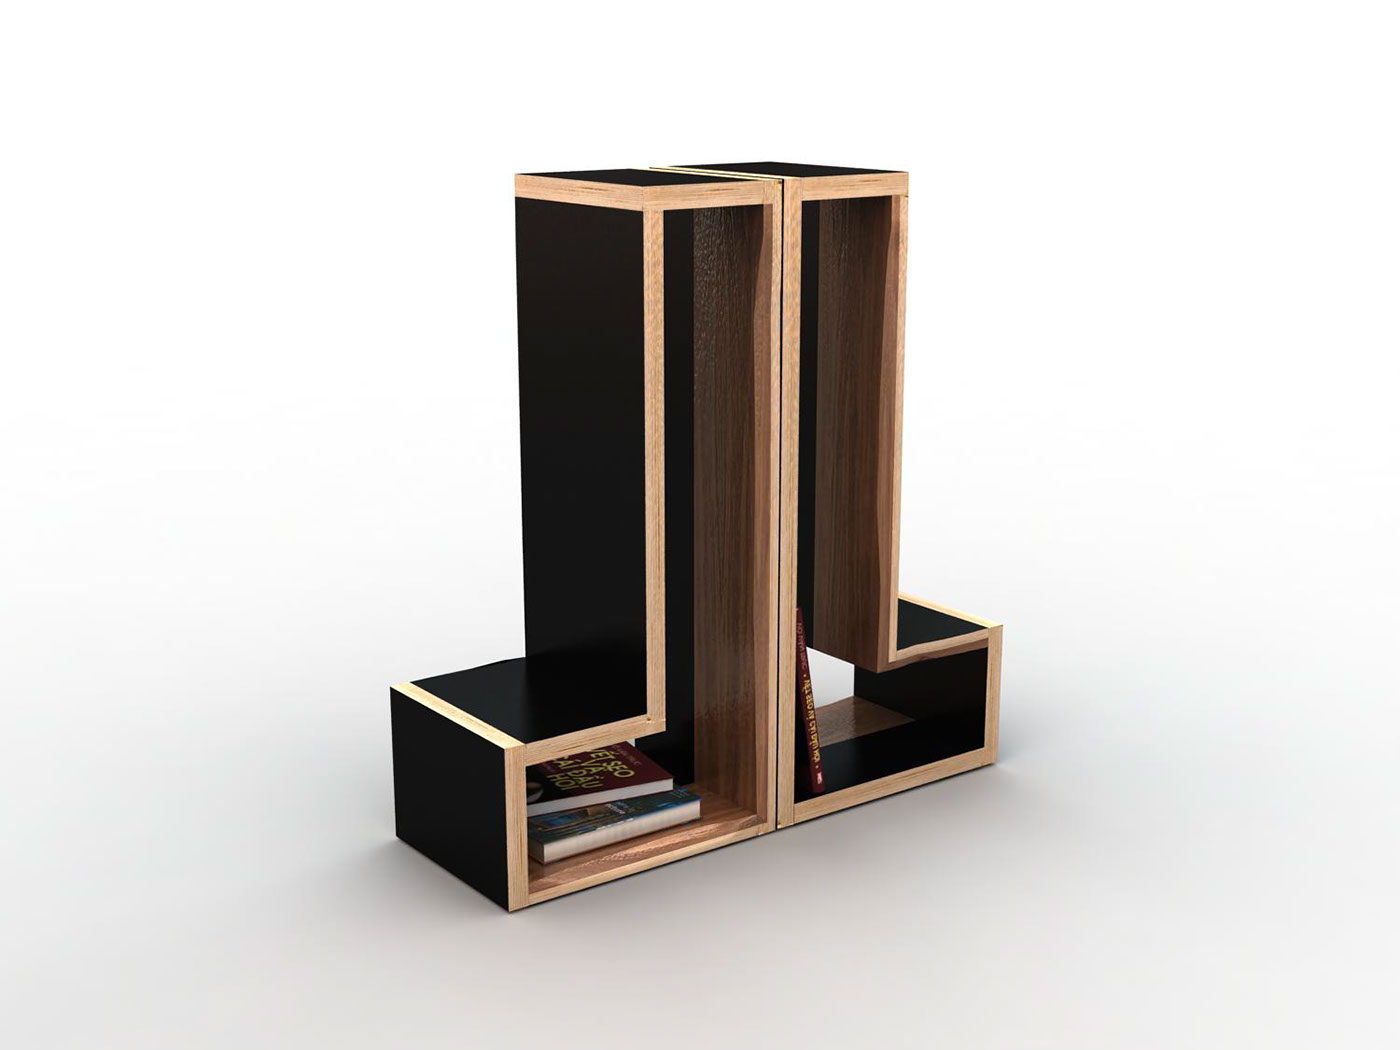 tetris plywood furniture book shelf